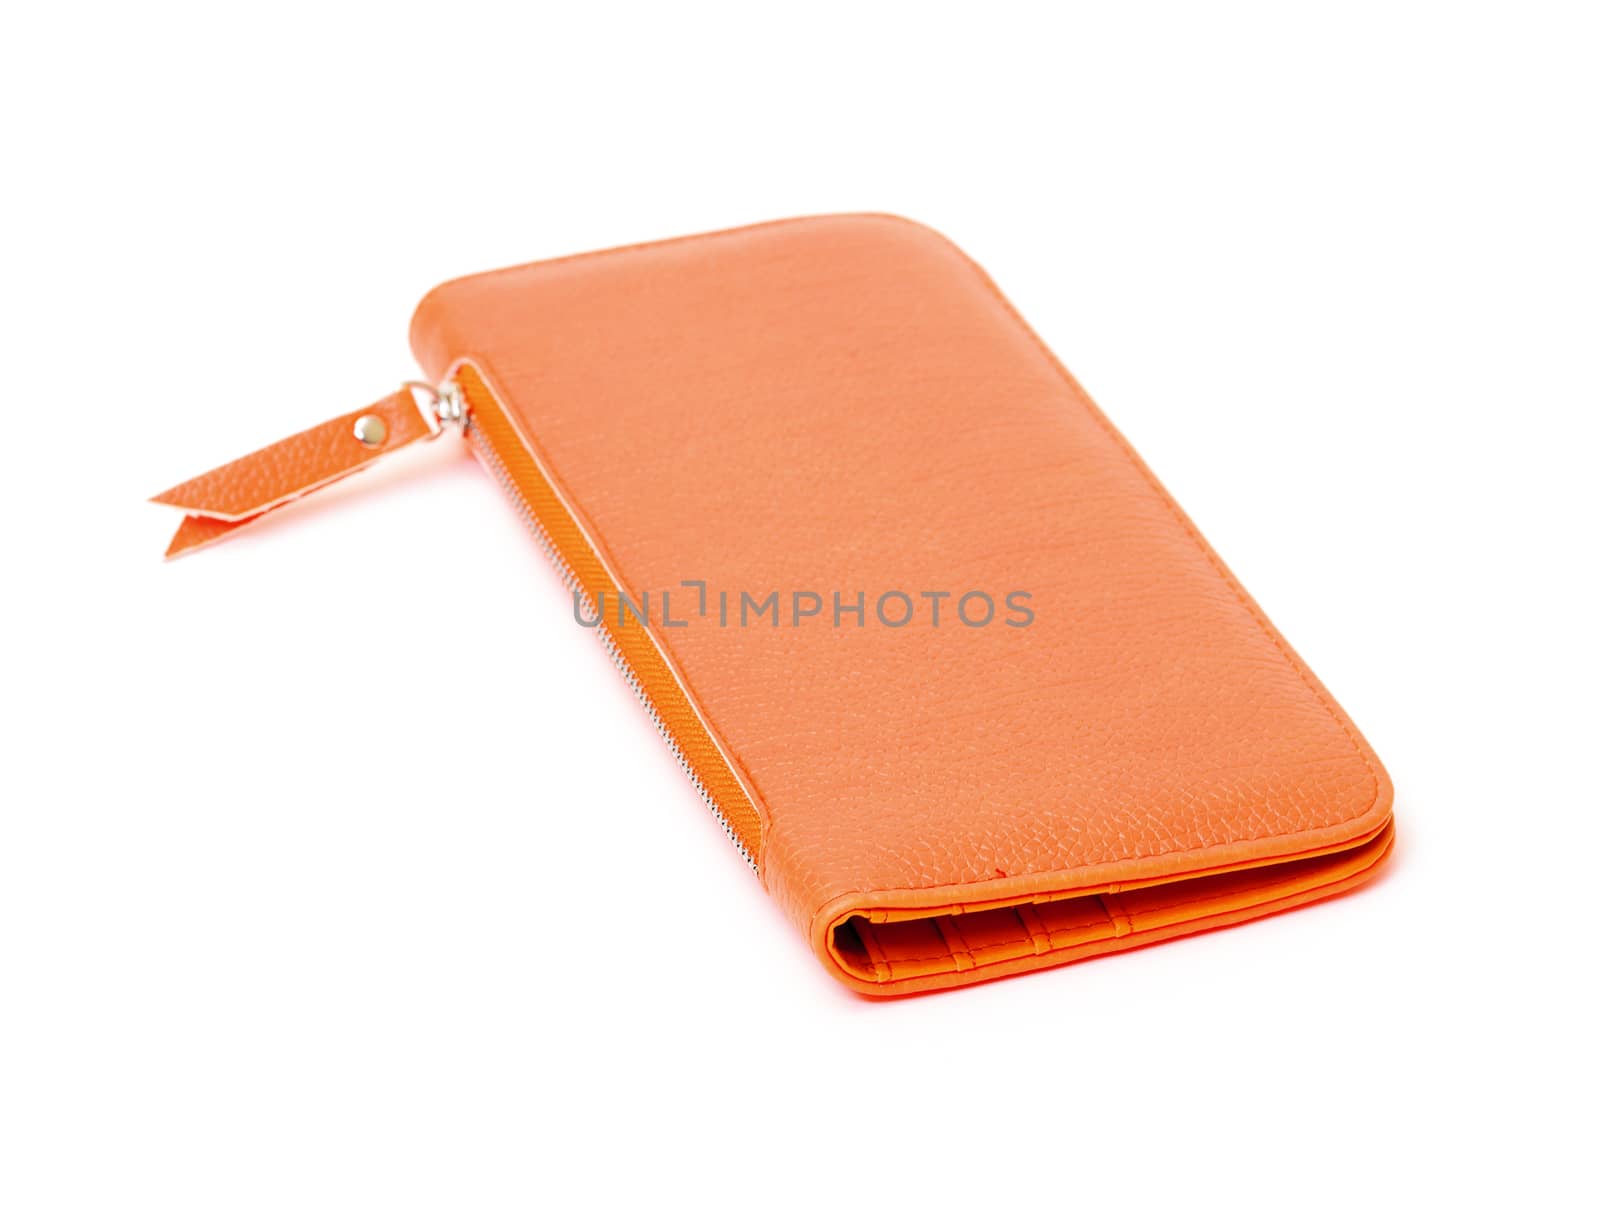 New Orange Leather Wallet on white background